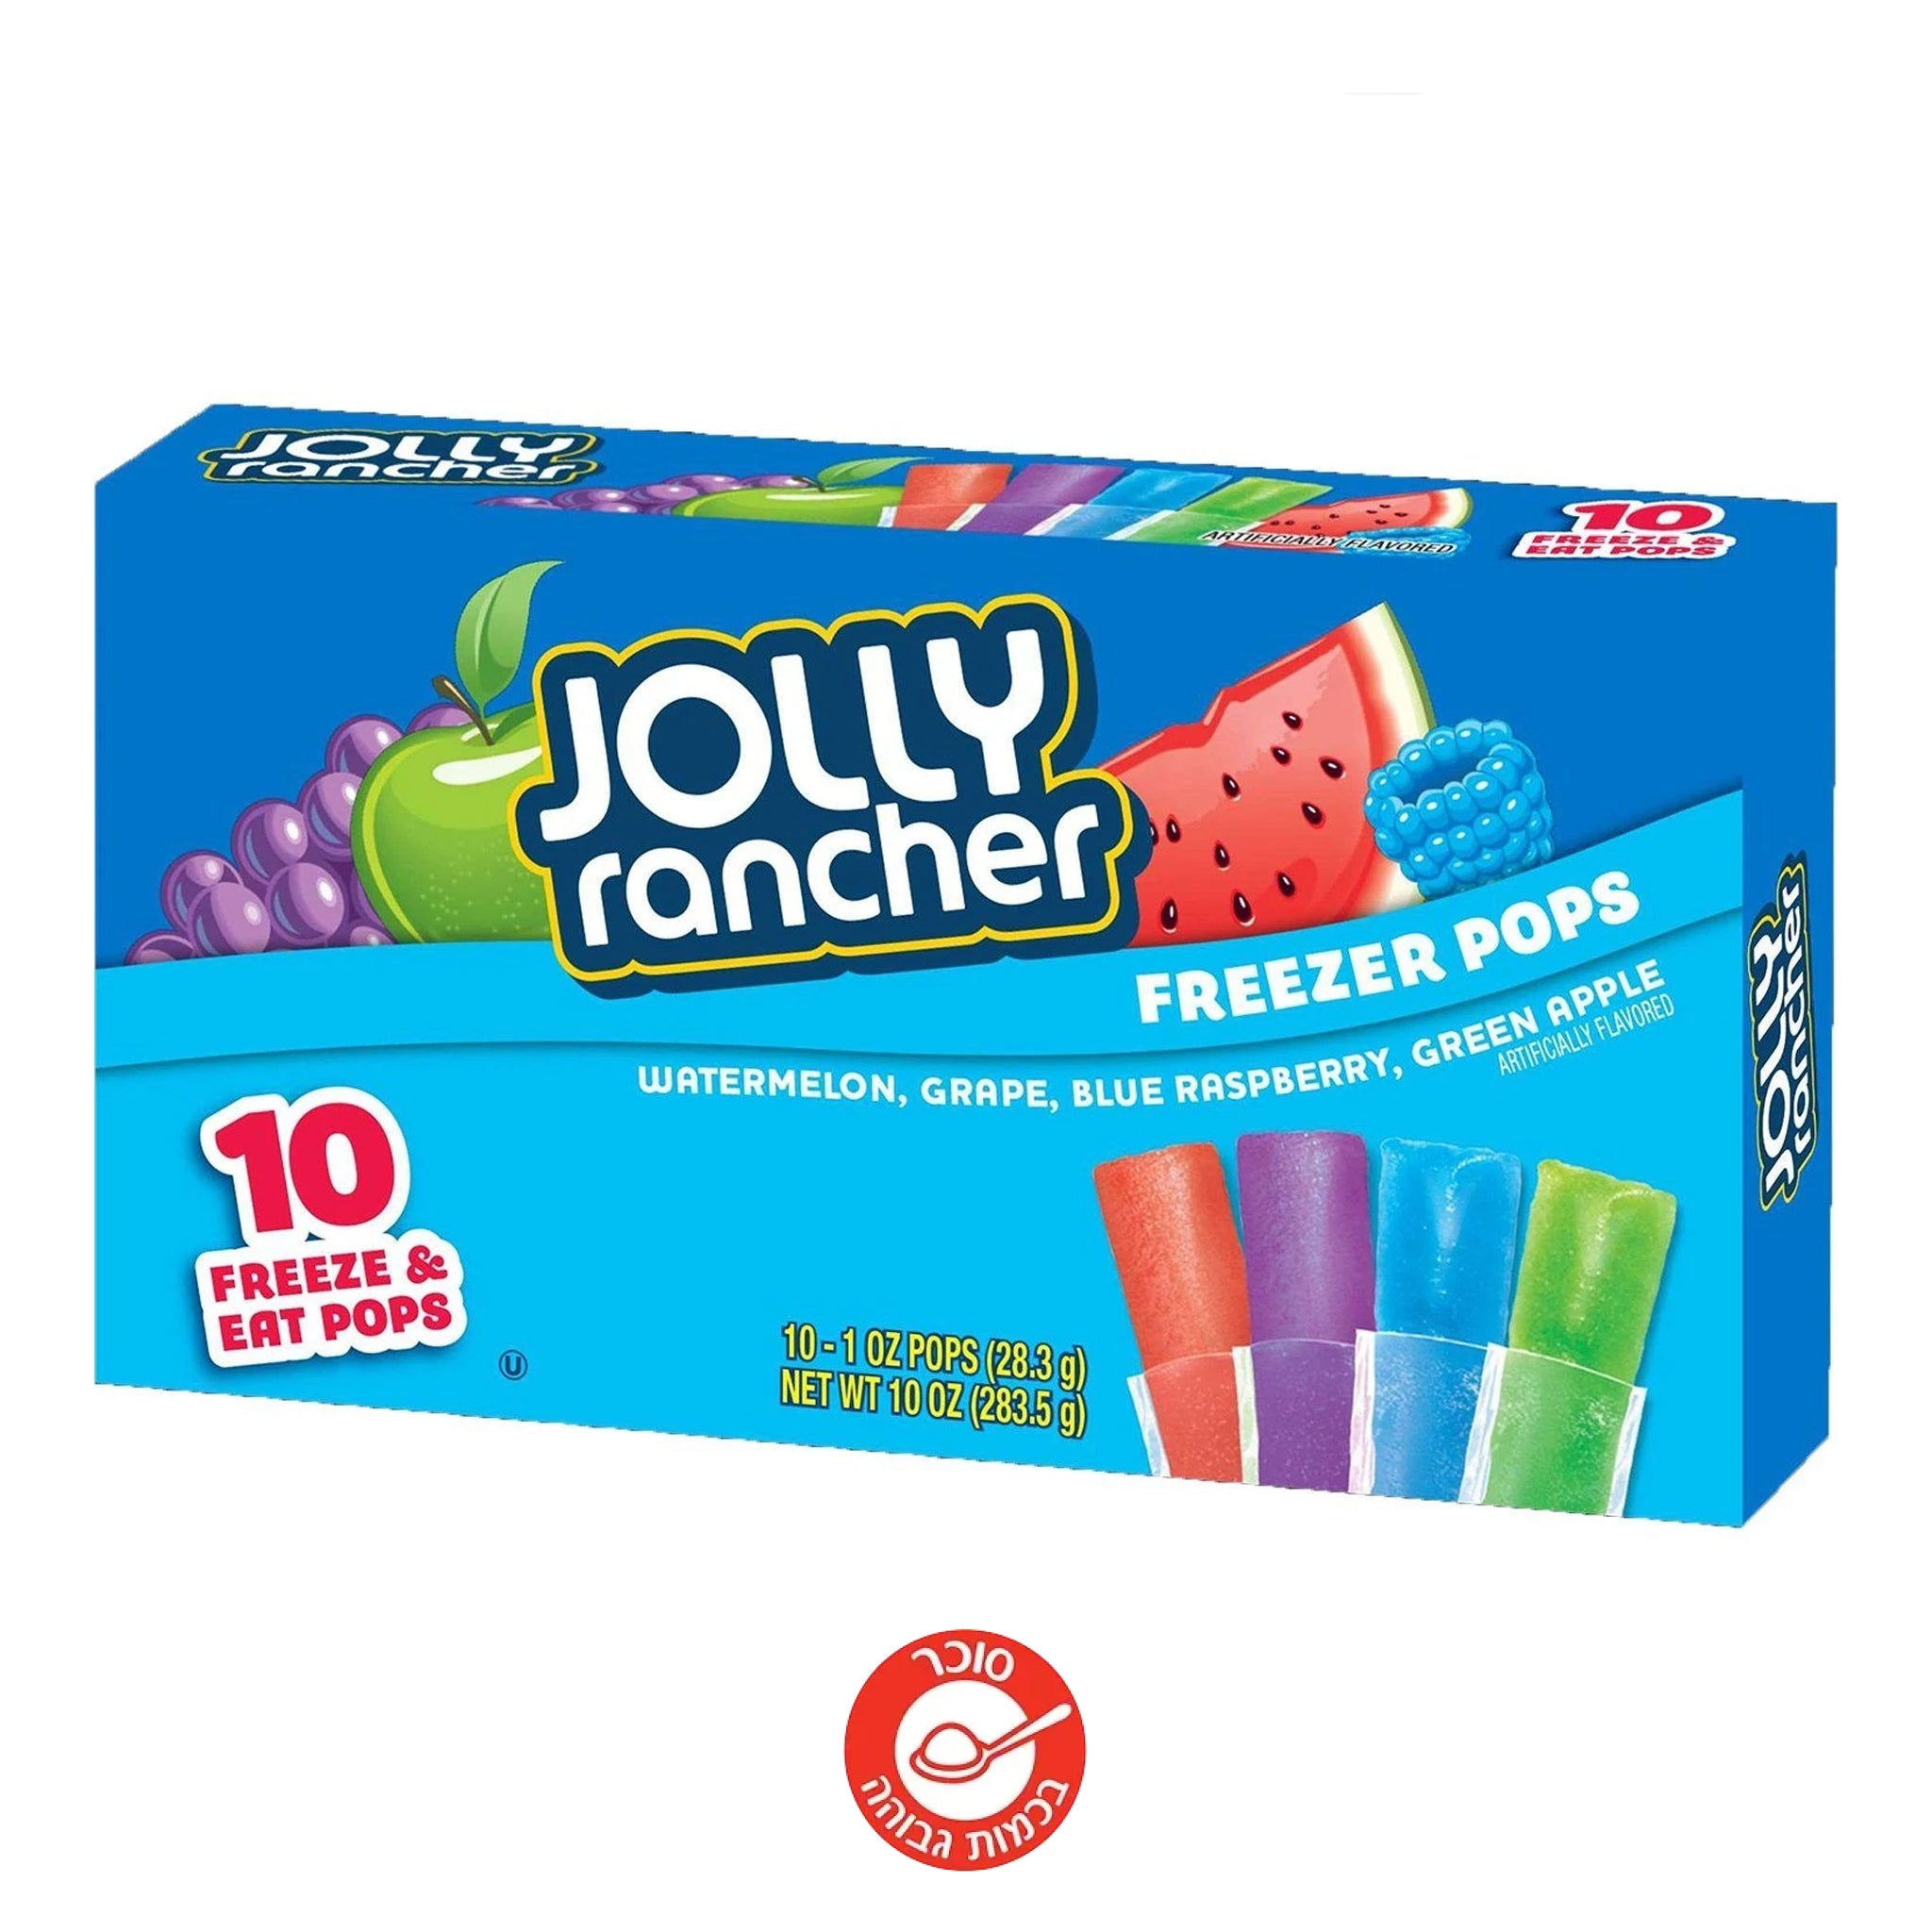 JollyRancher Freezer Pops ג'ולי ראנצר שלוקים